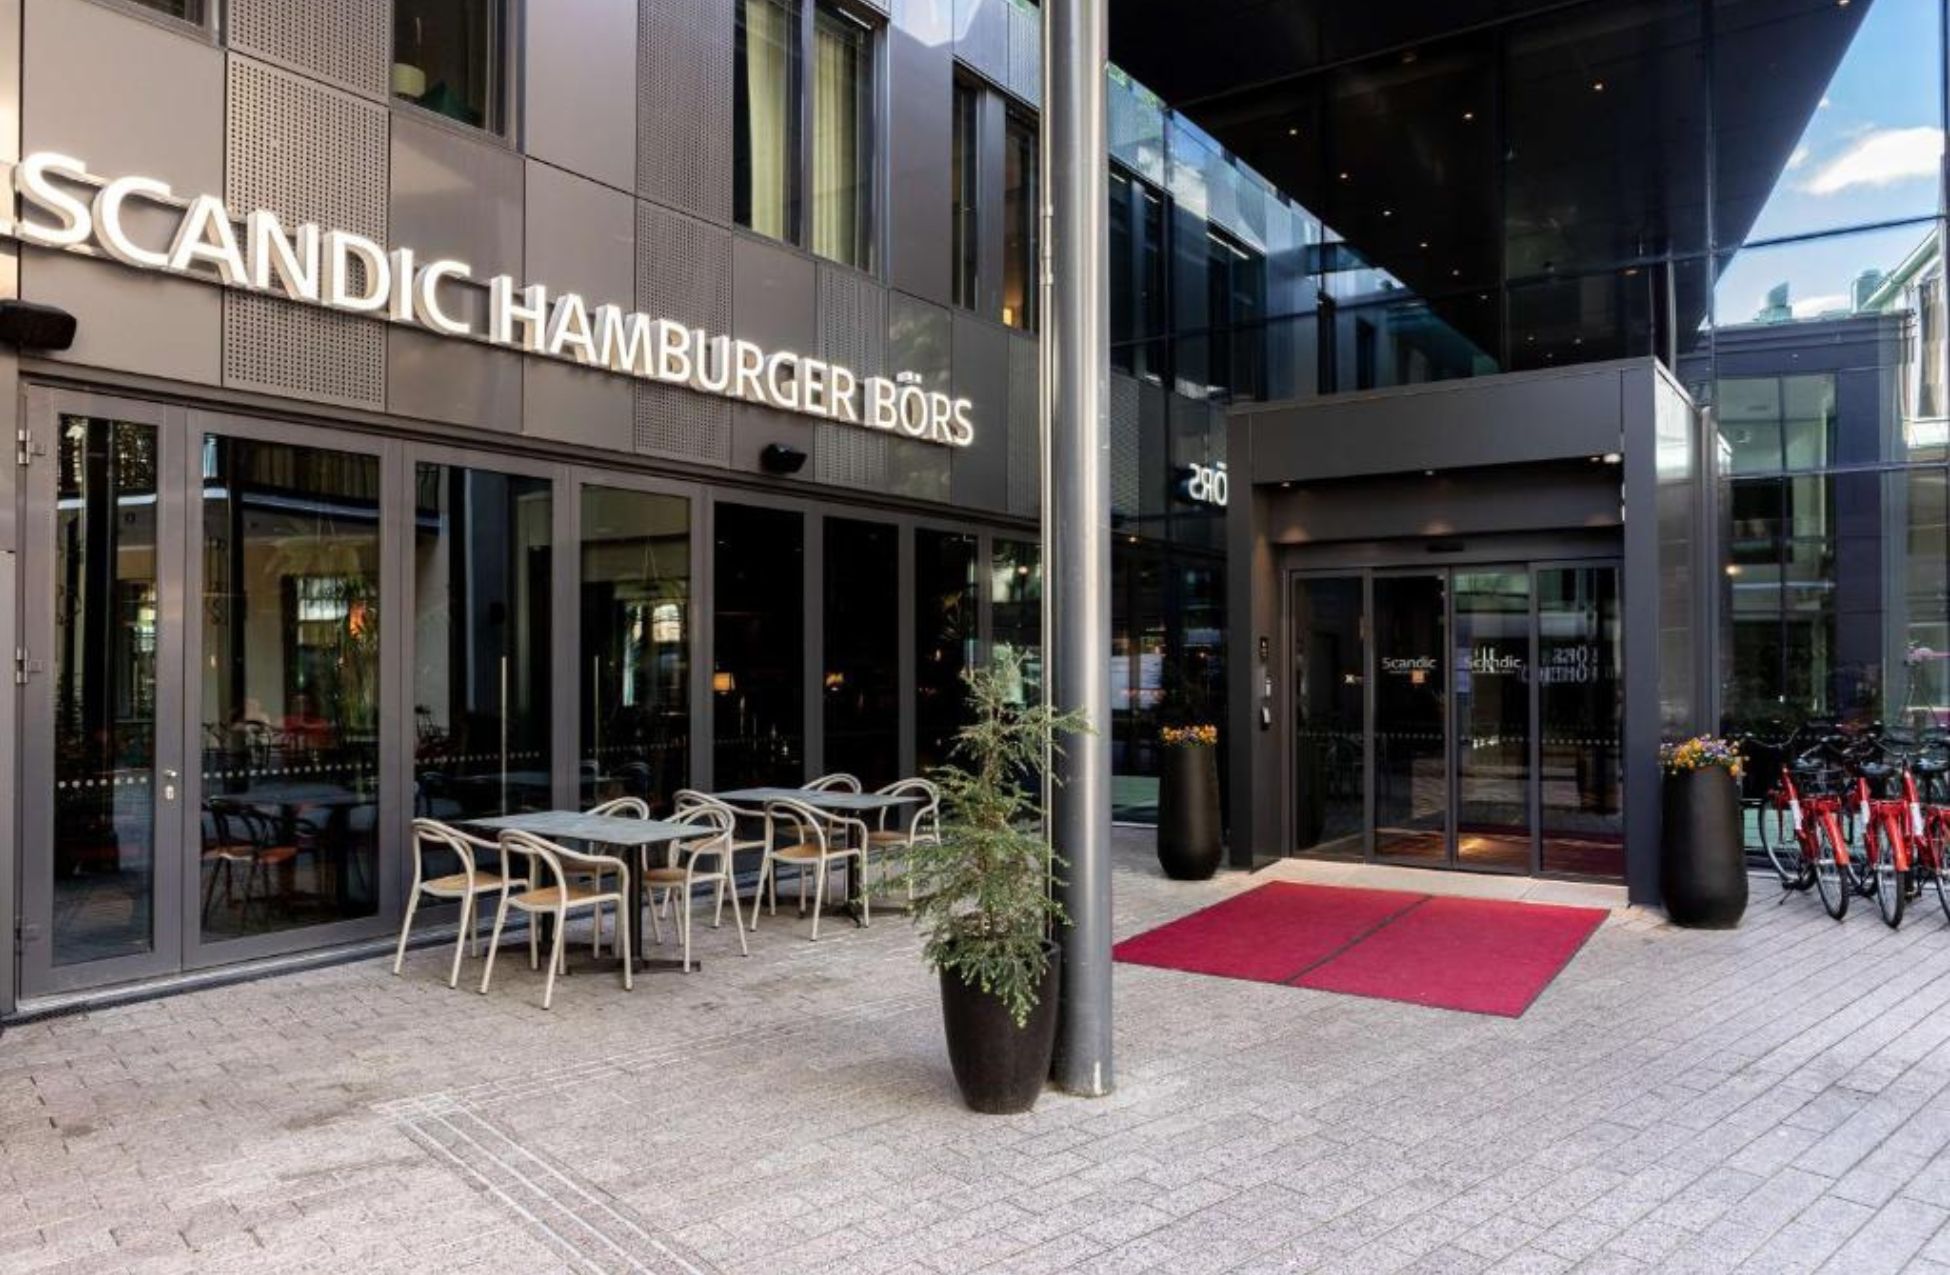 Scandic Hamburger Börs - Best Hotels In Turku